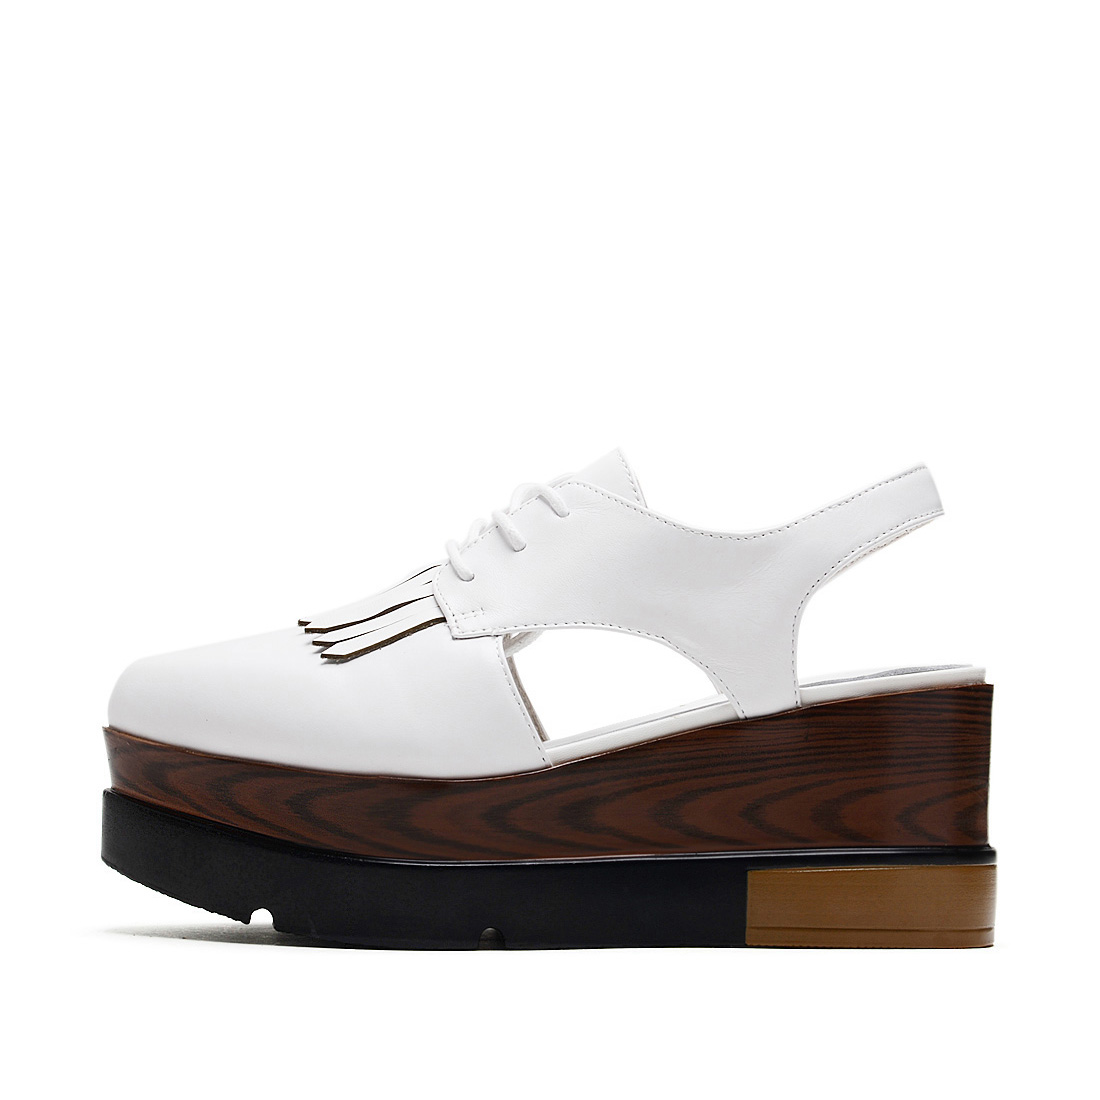 [FOOTWILL福特薇]欧美风交叉绑带牛皮革半凉鞋(尺码标准)
编号：A0788B1A70